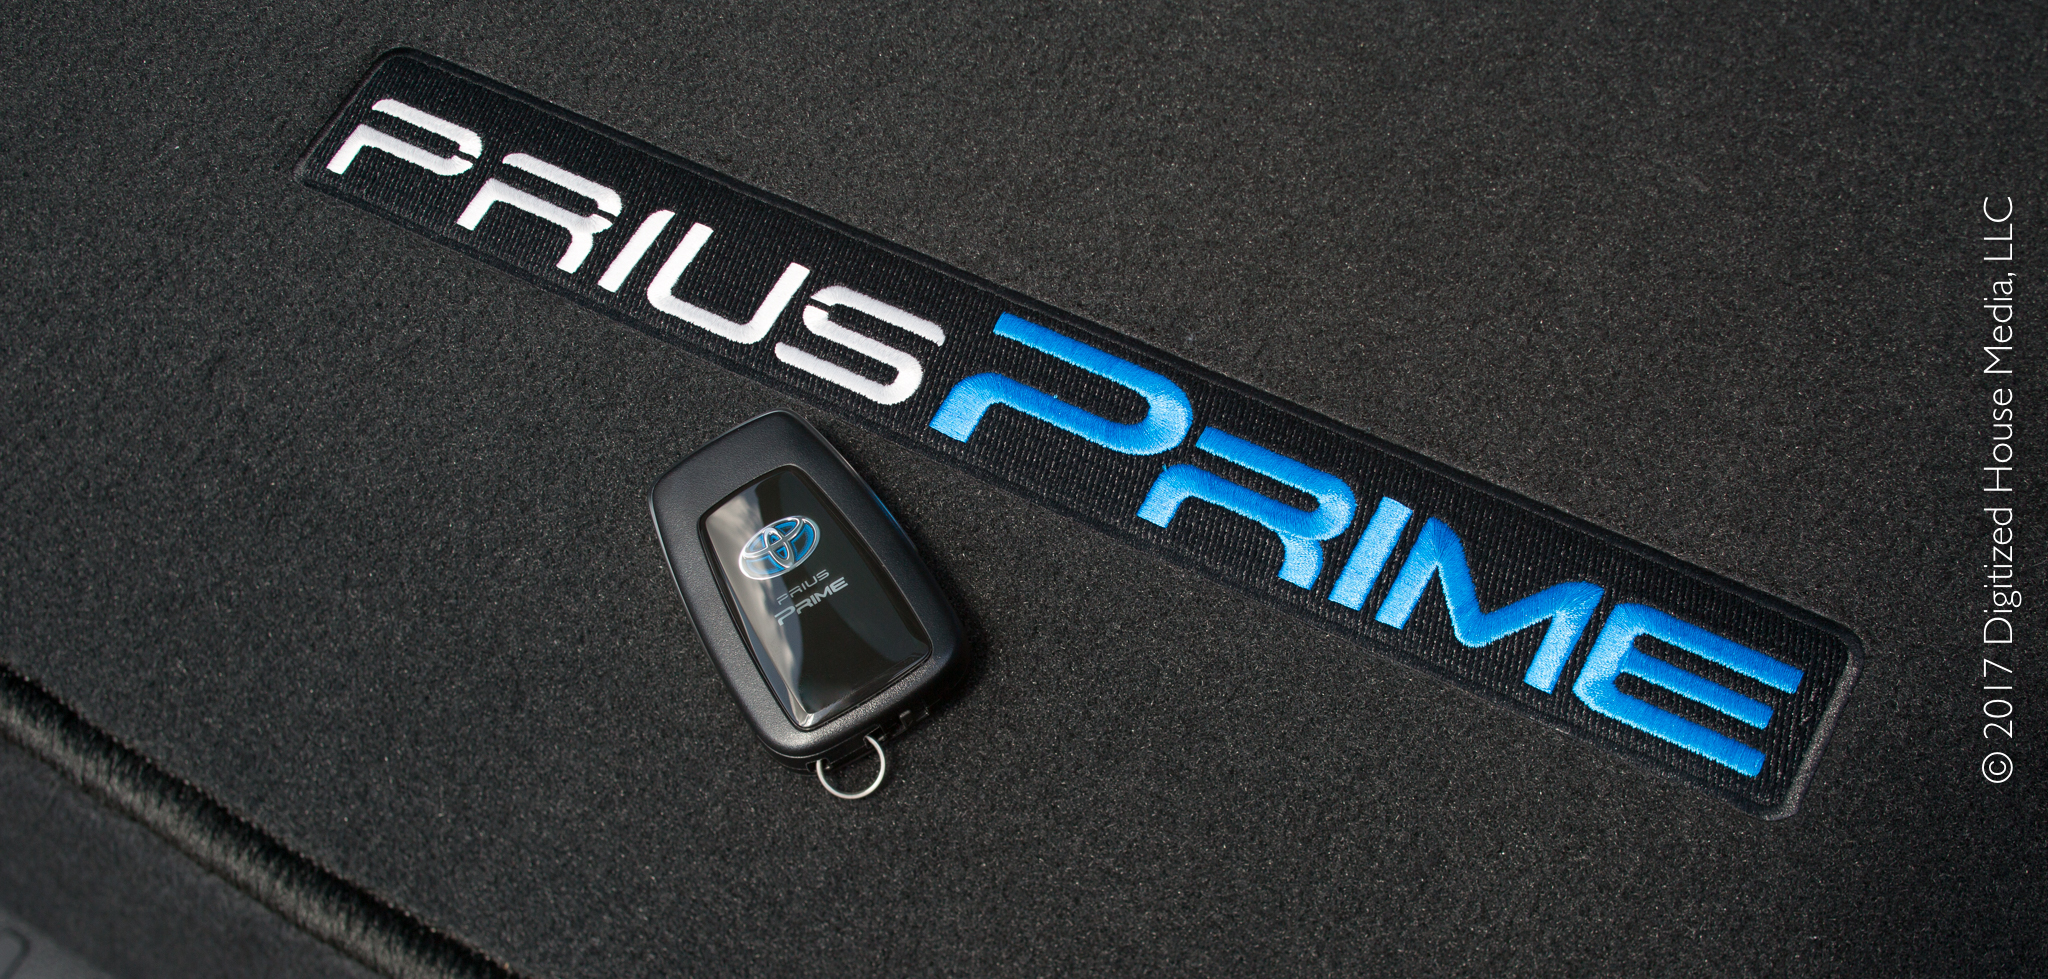 2017 Toyota Prius Prime Advanced key fob